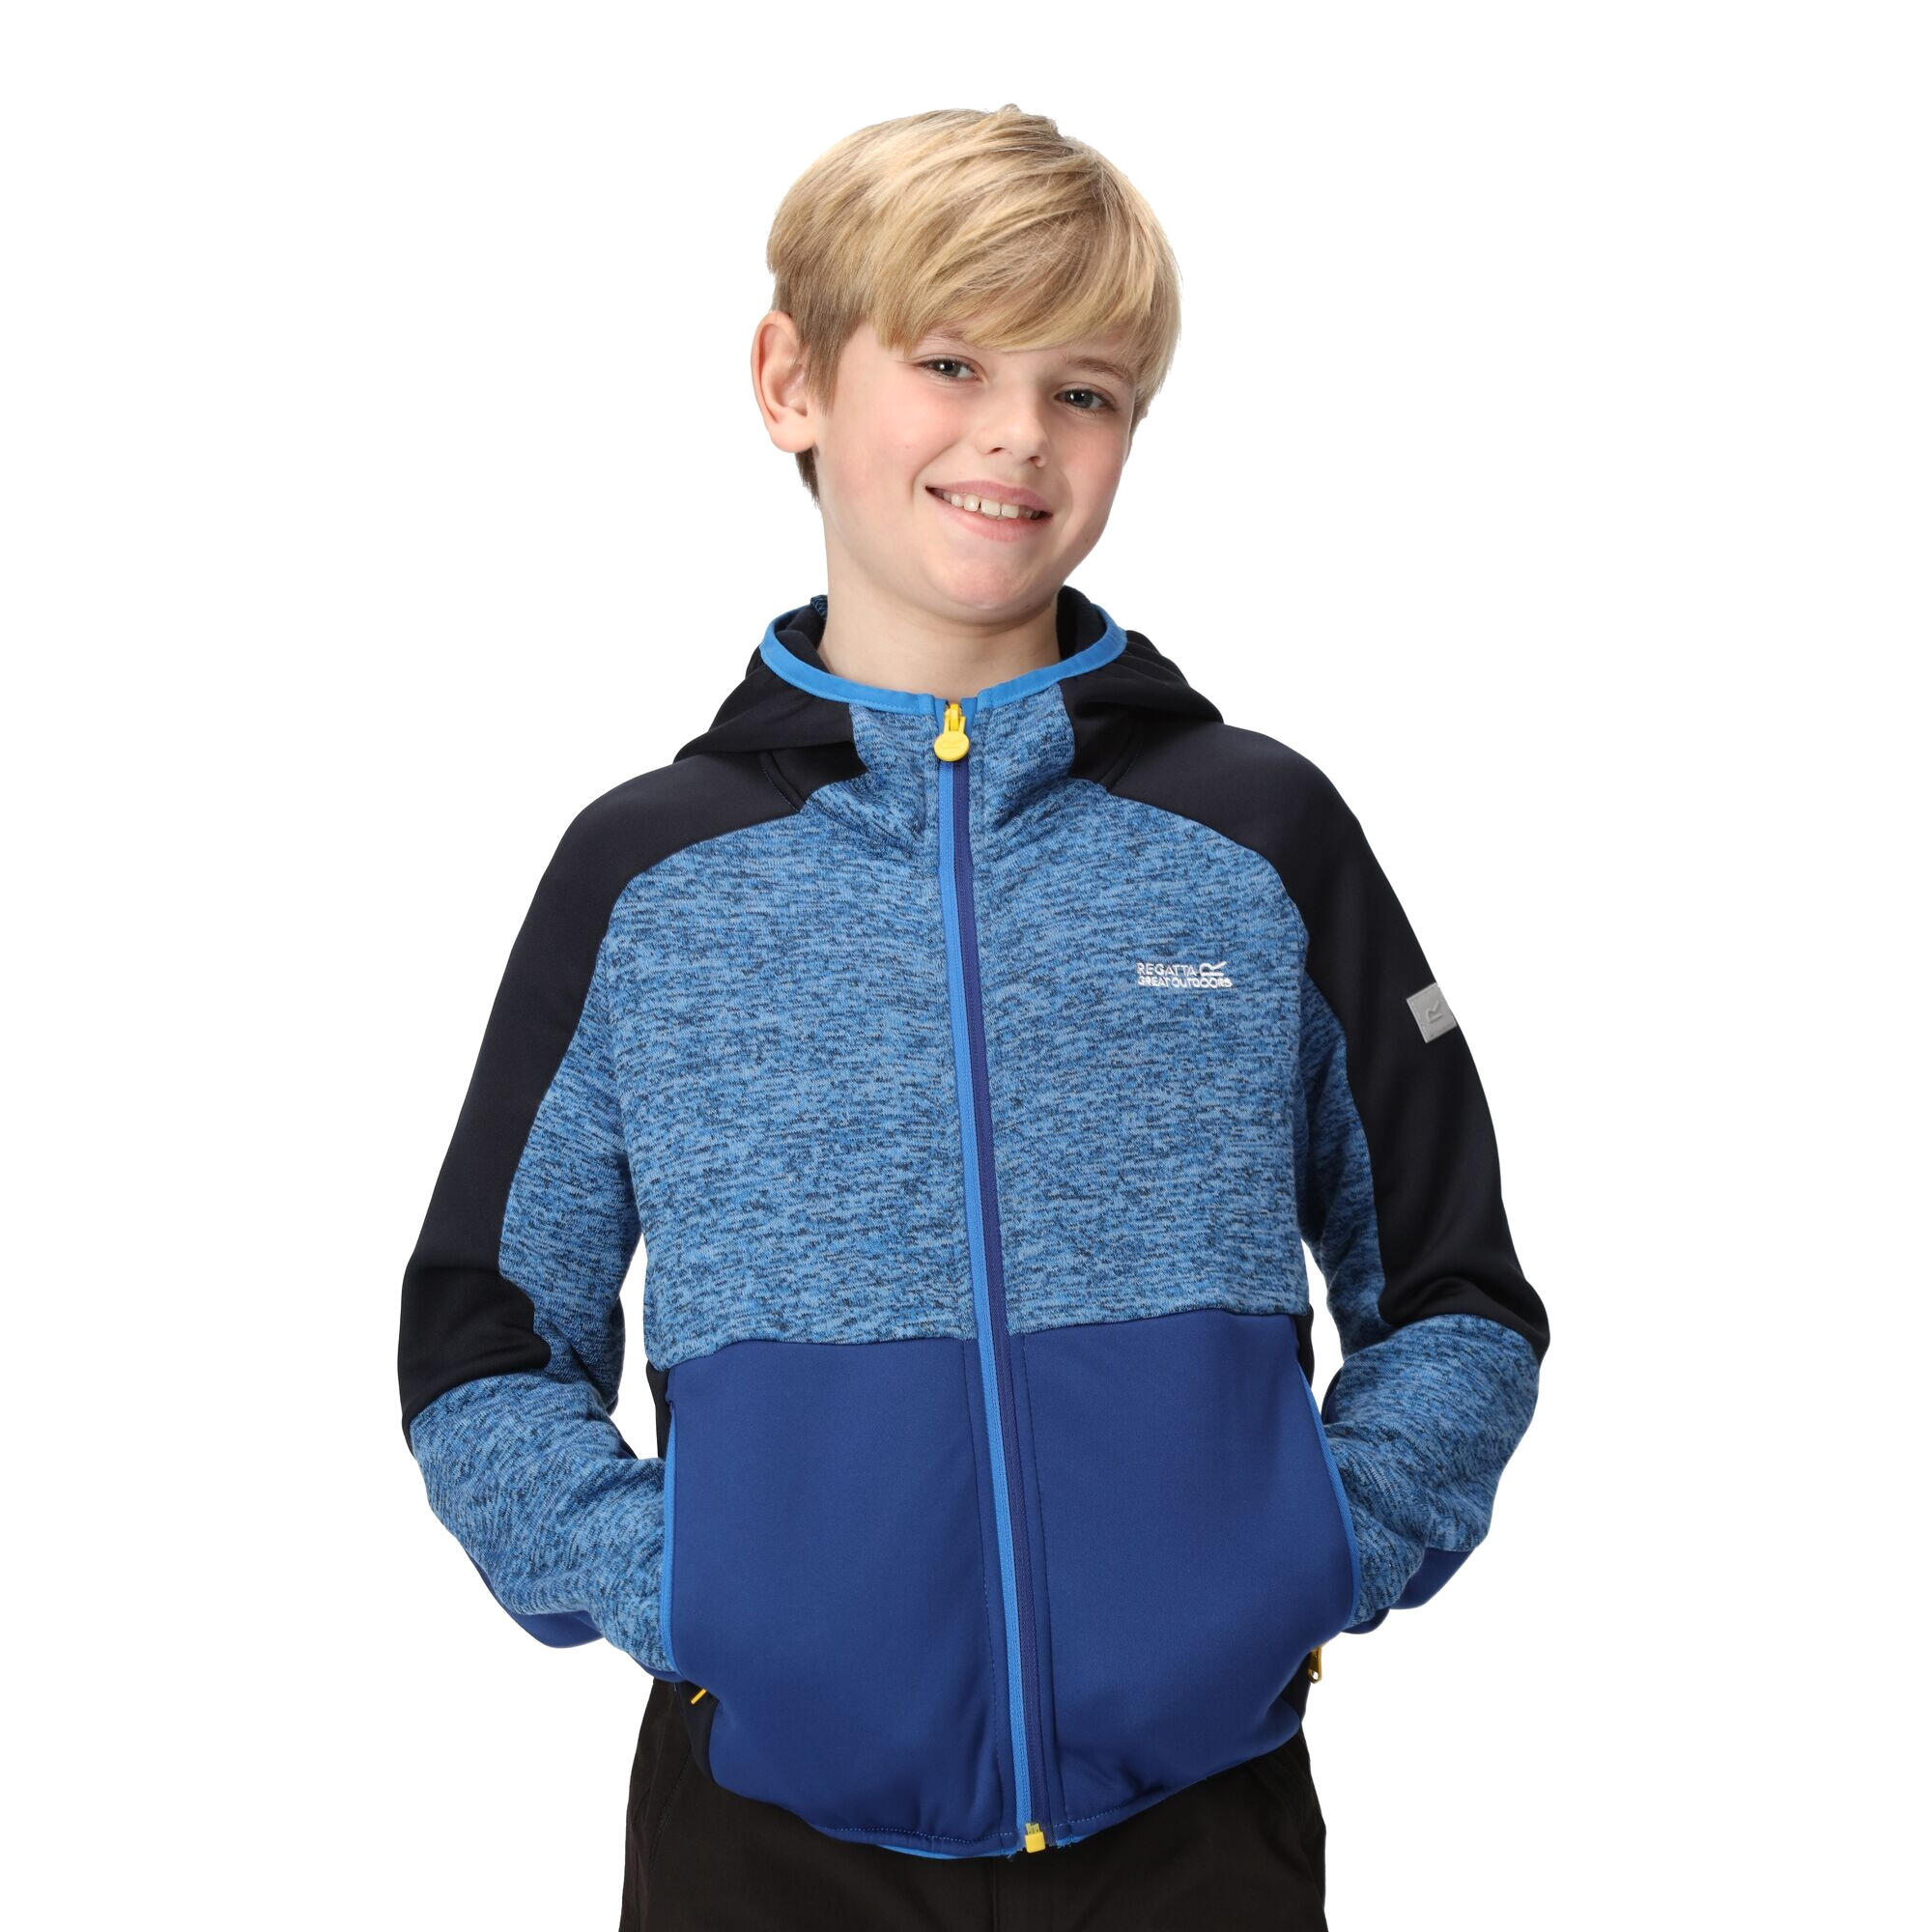 Childrens/Kids Dissolver VII Full Zip Fleece Jacket (Strong Blue/Navy) 4/5